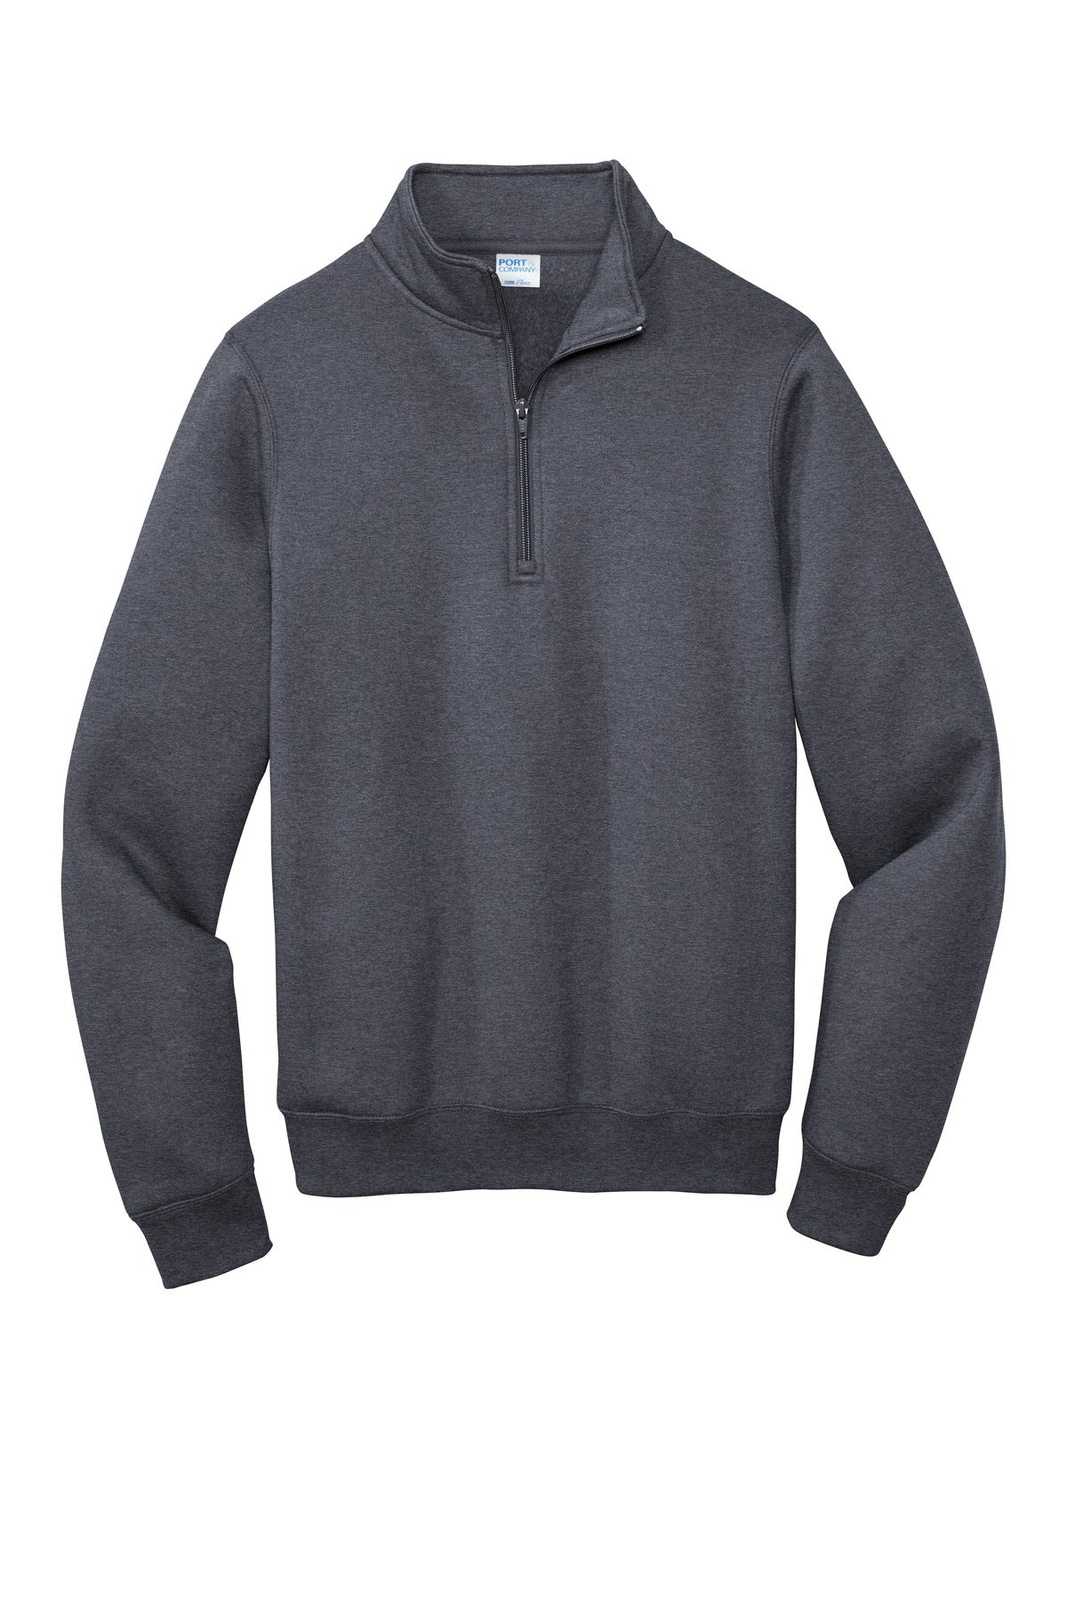 Port &amp; Company PC78Q Core Fleece 1/4-Zip Pullover Sweatshirt - Heather Navy - HIT a Double - 5